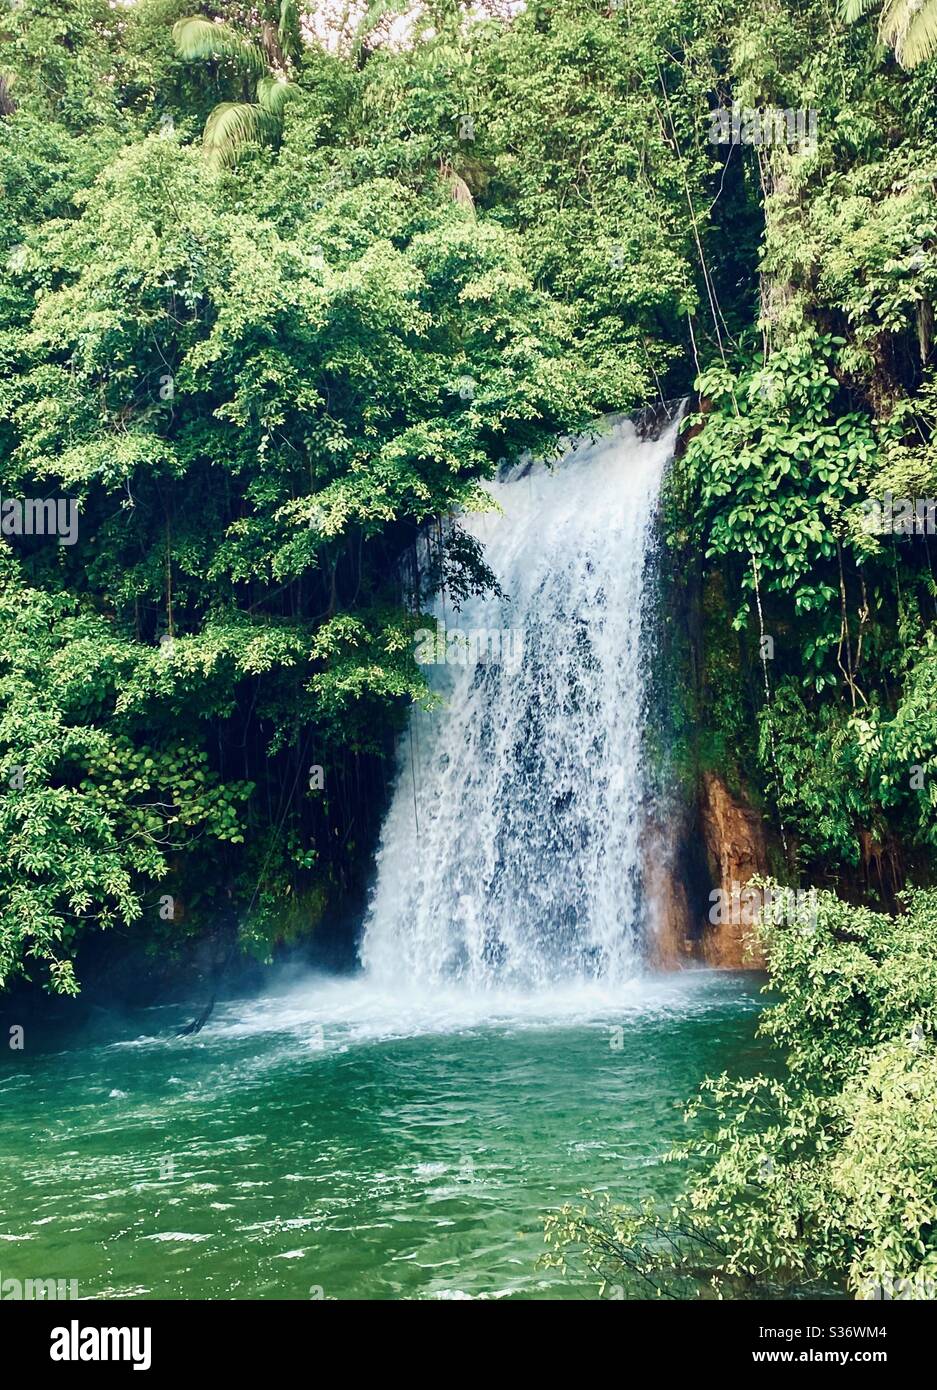 Waterfall in emerald green surroundings. Stock Photo